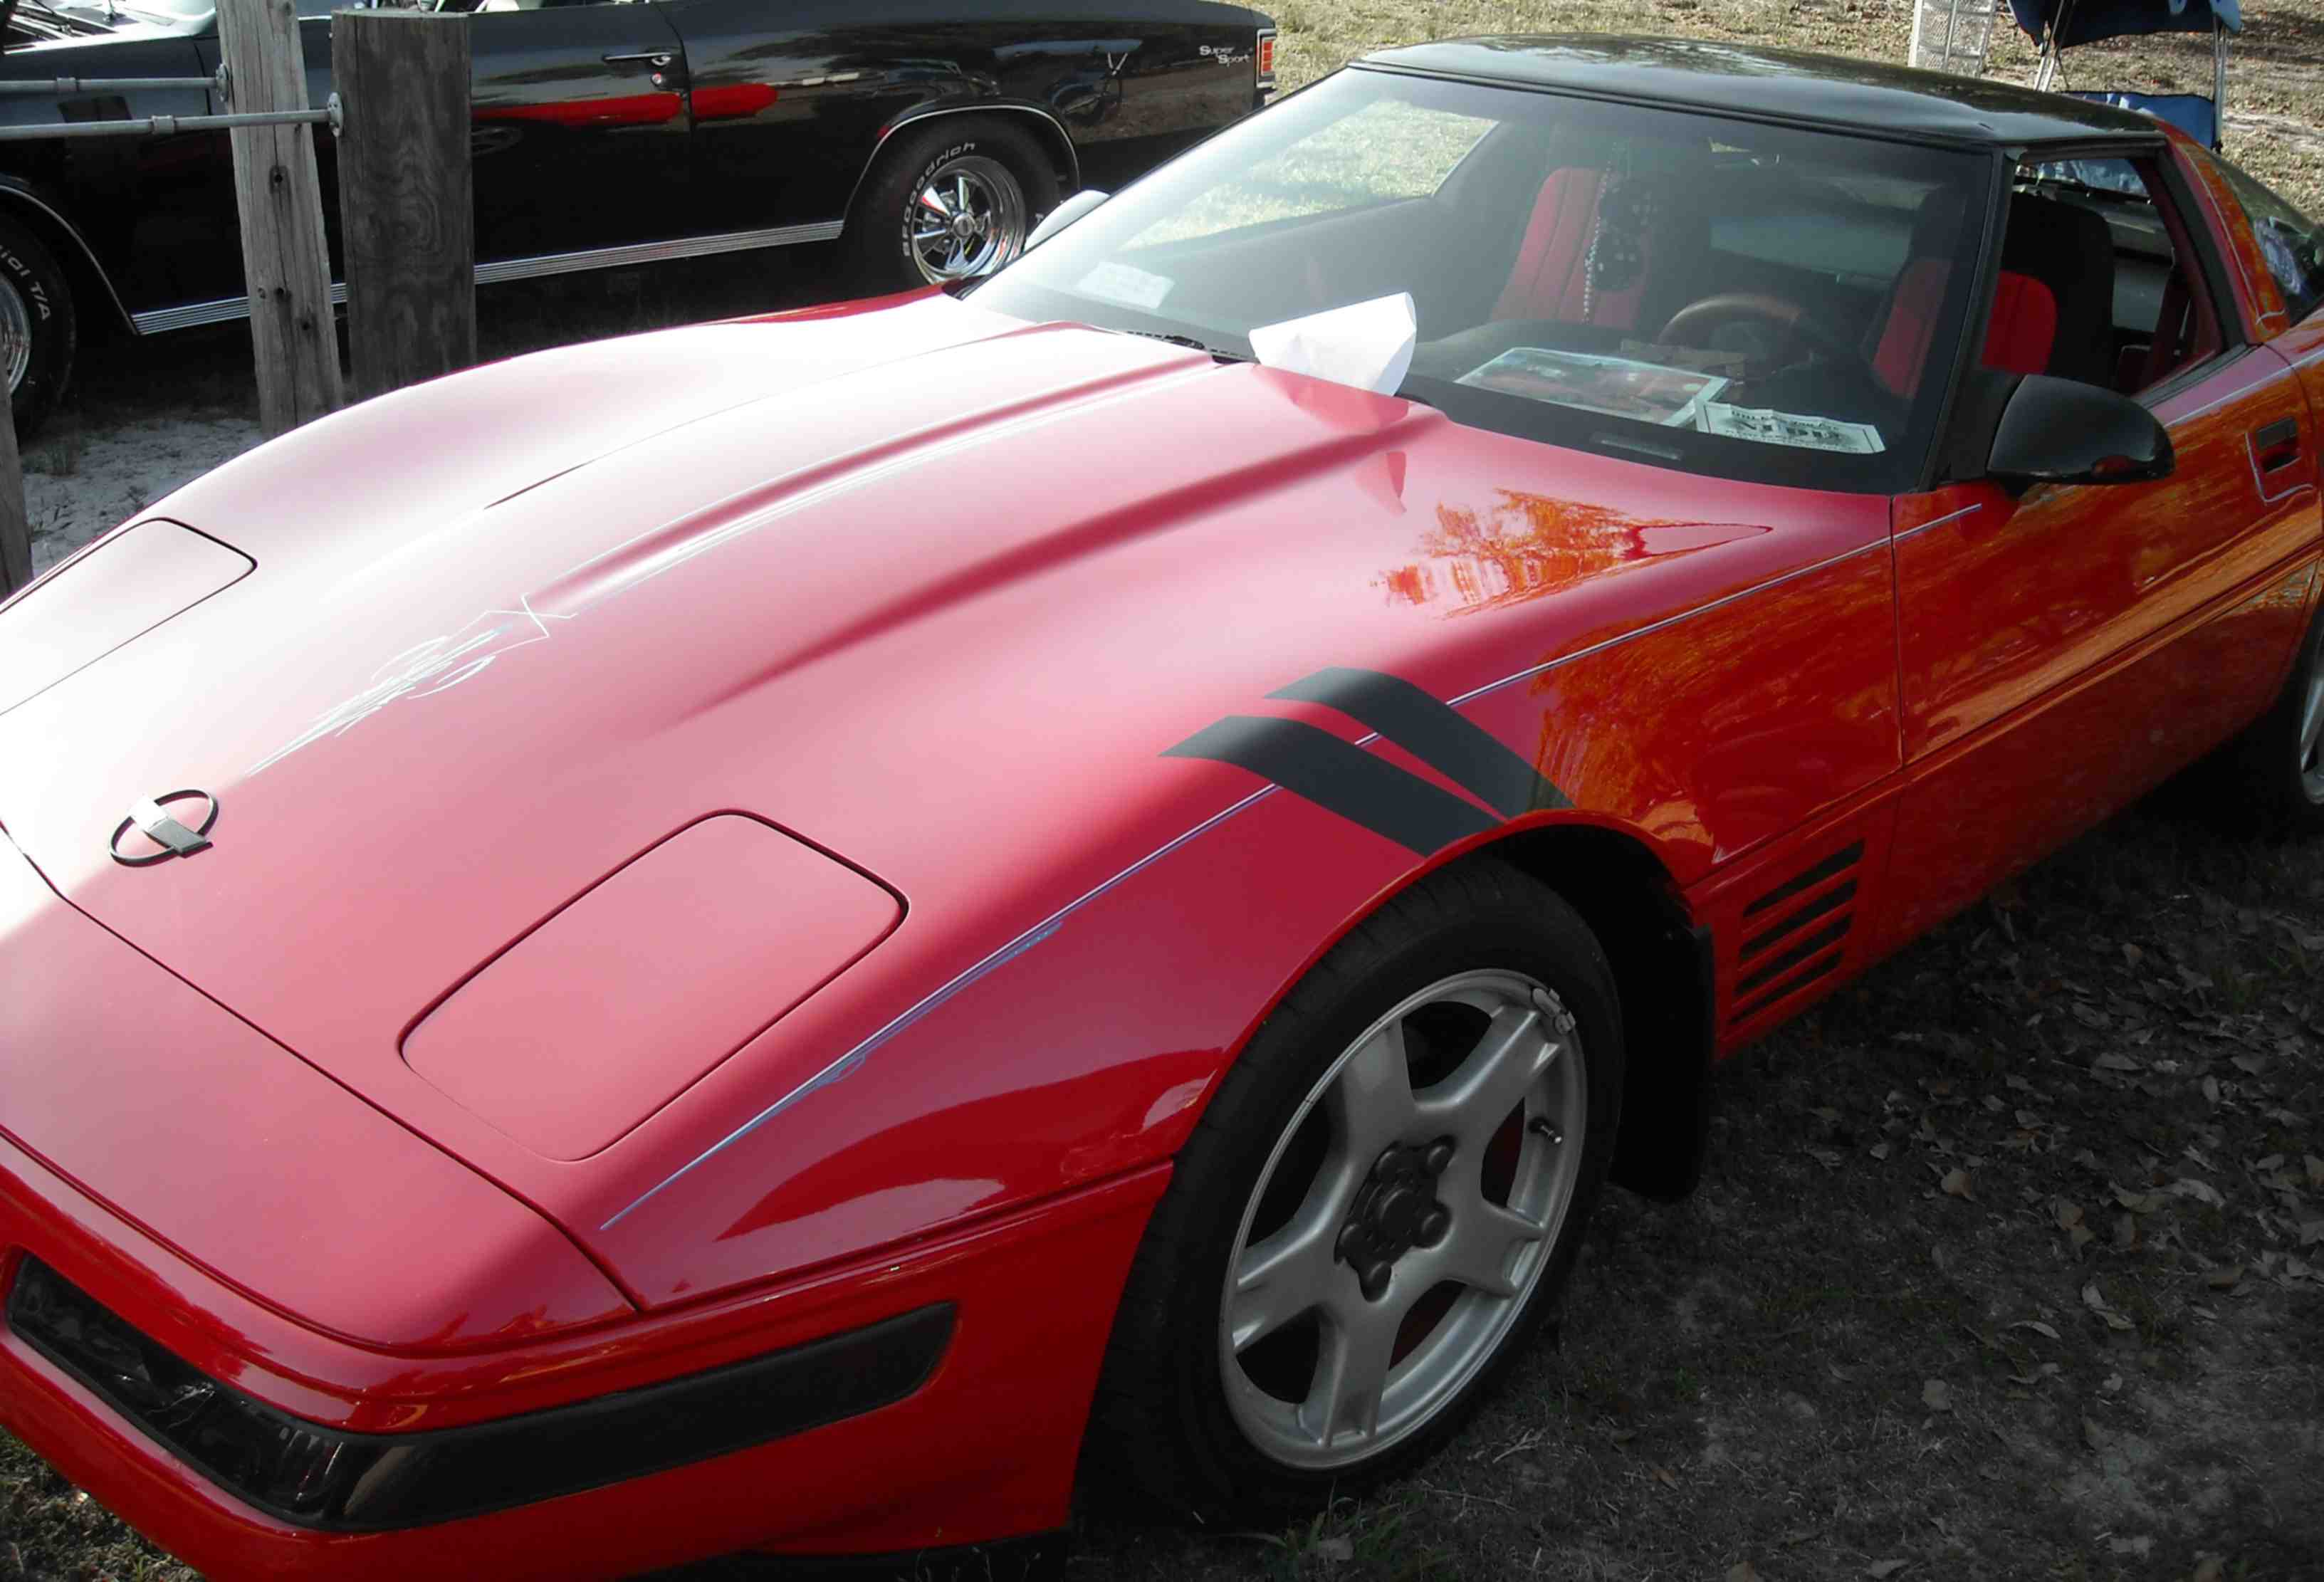 A Red Corvette Grand Sport